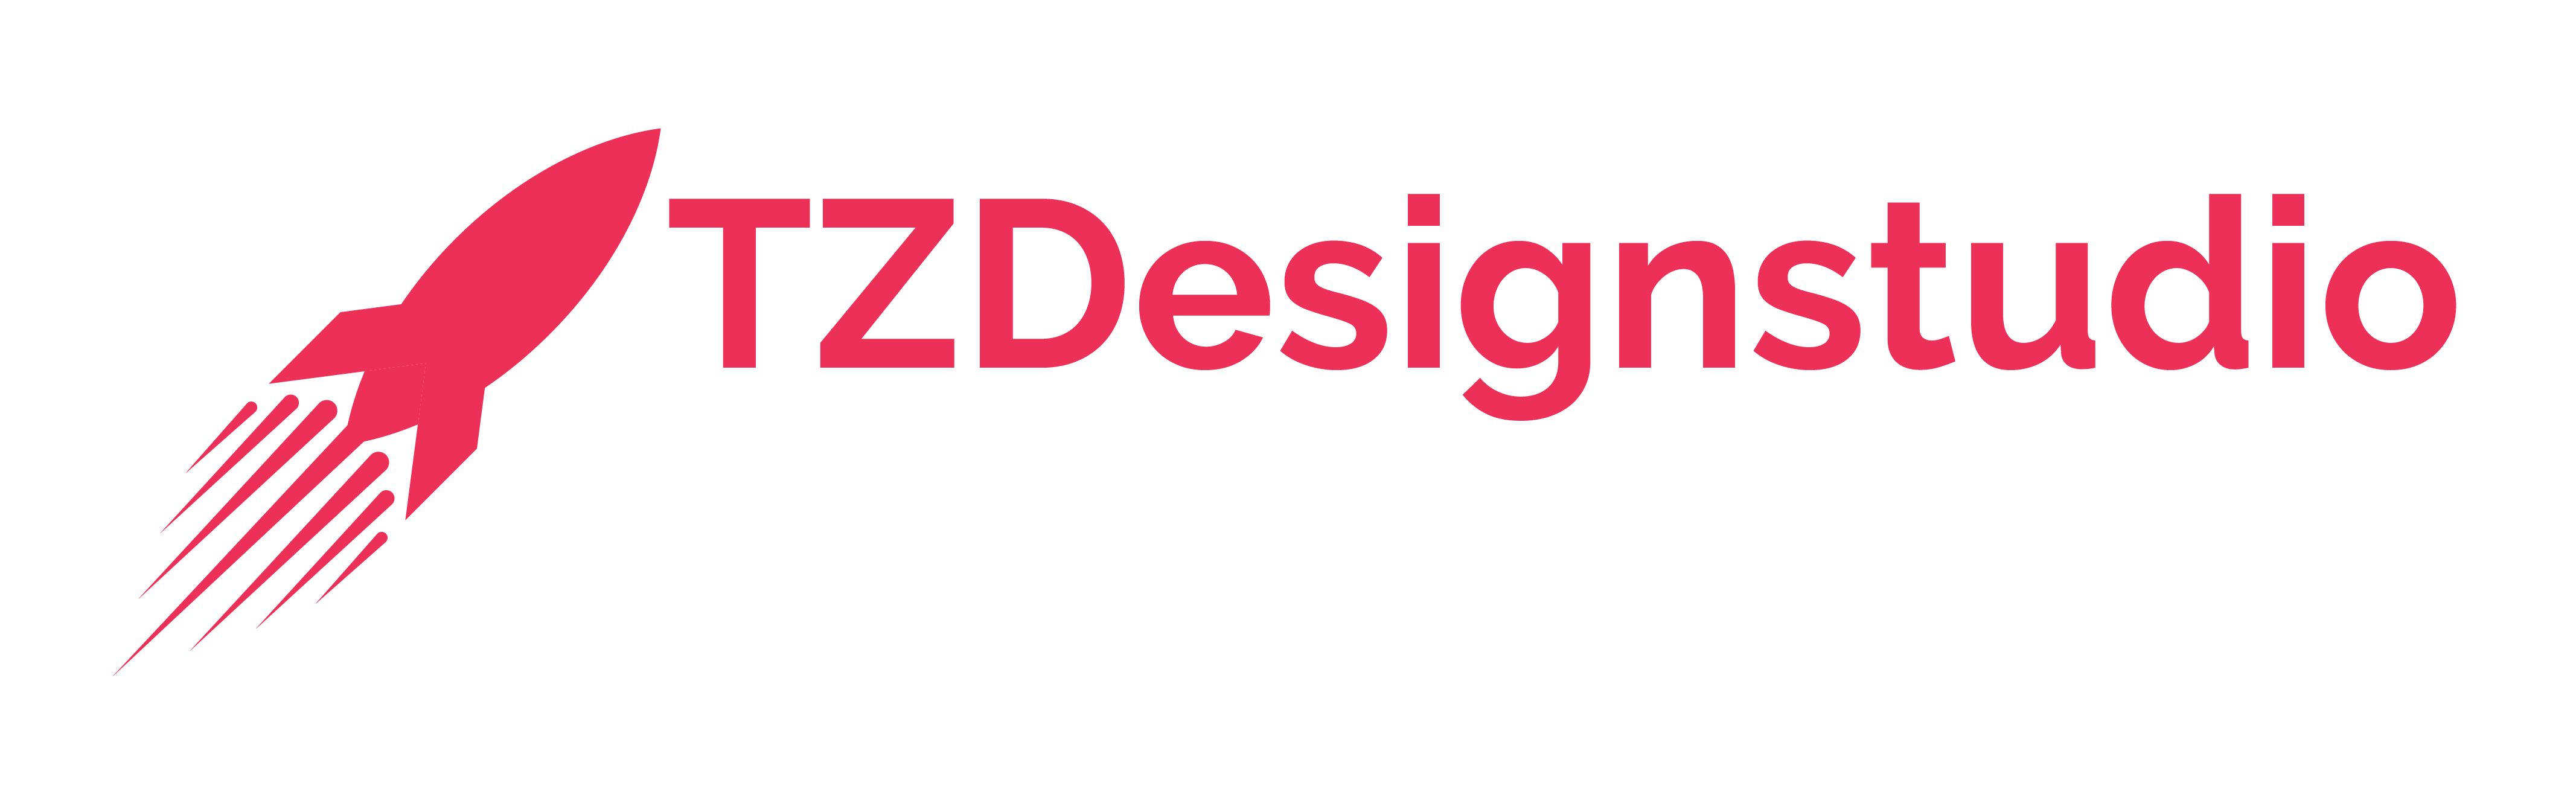 TZDesignstudio Logo